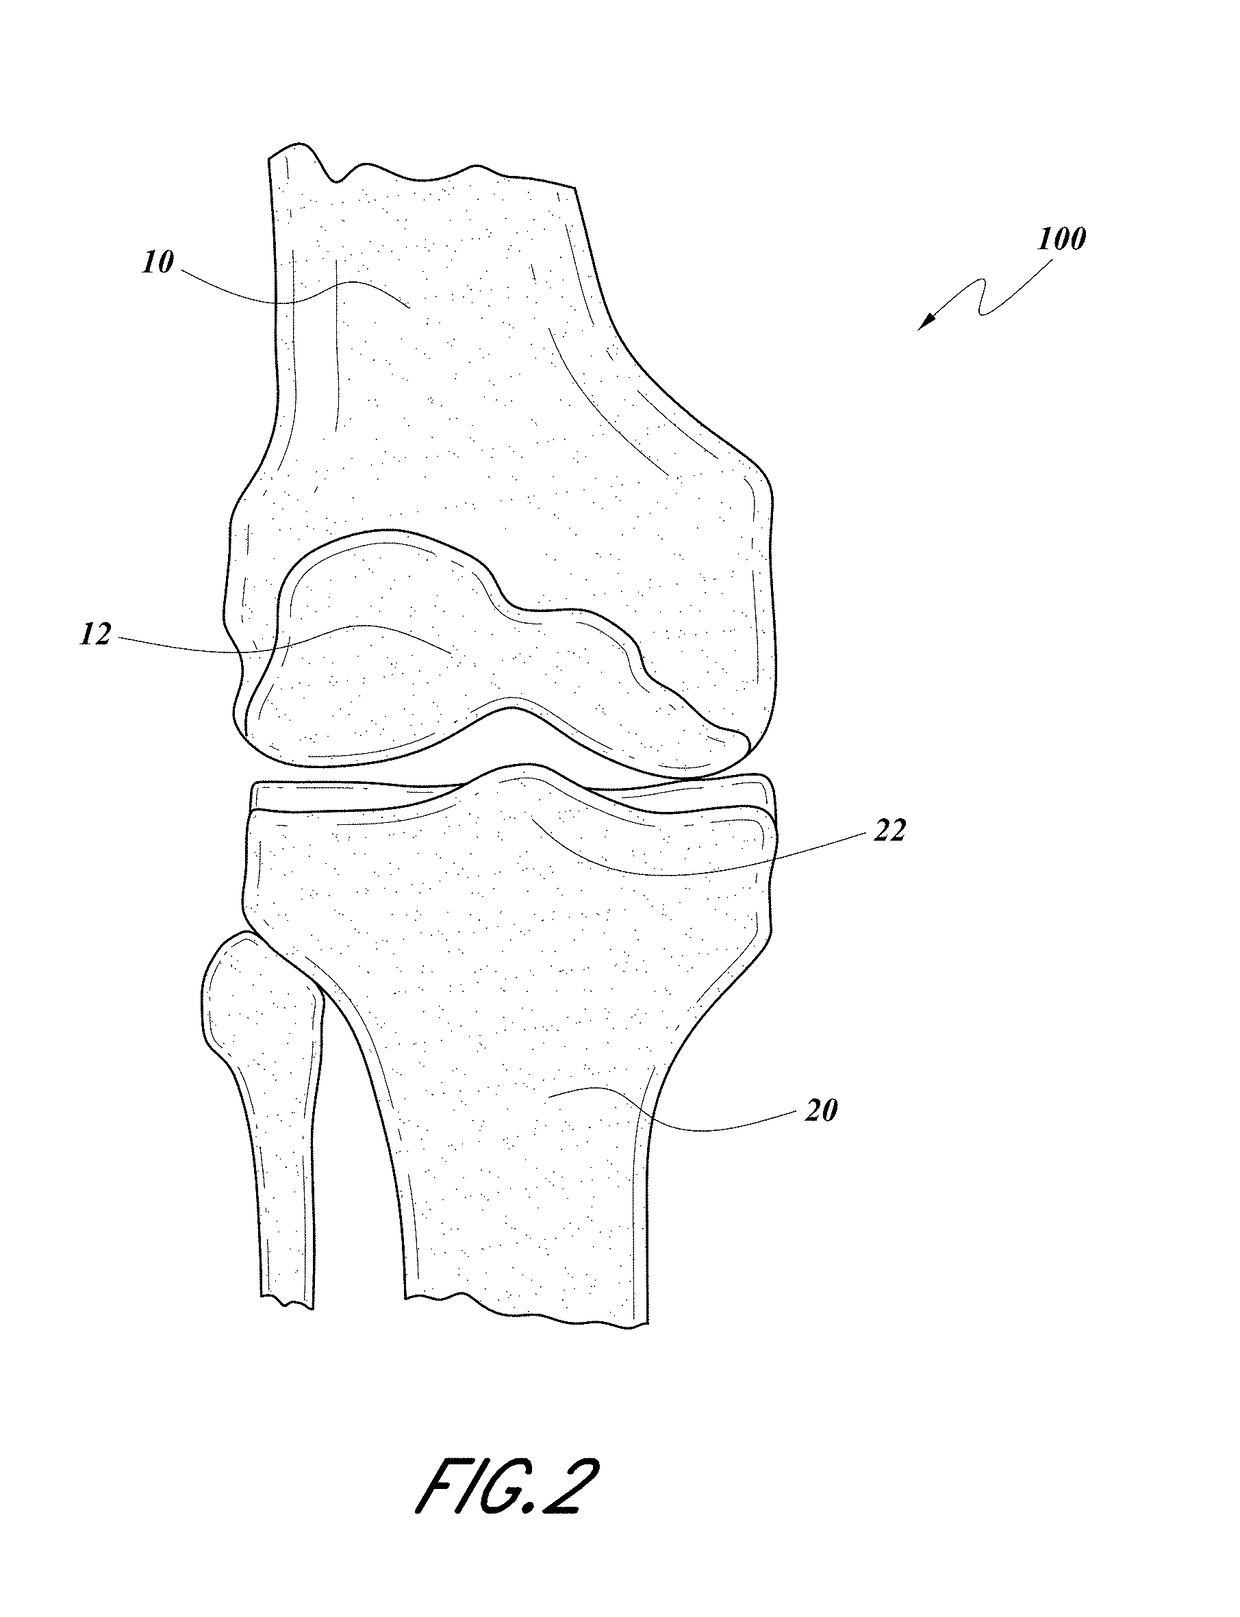 Modular total knee arthroplasty system and method